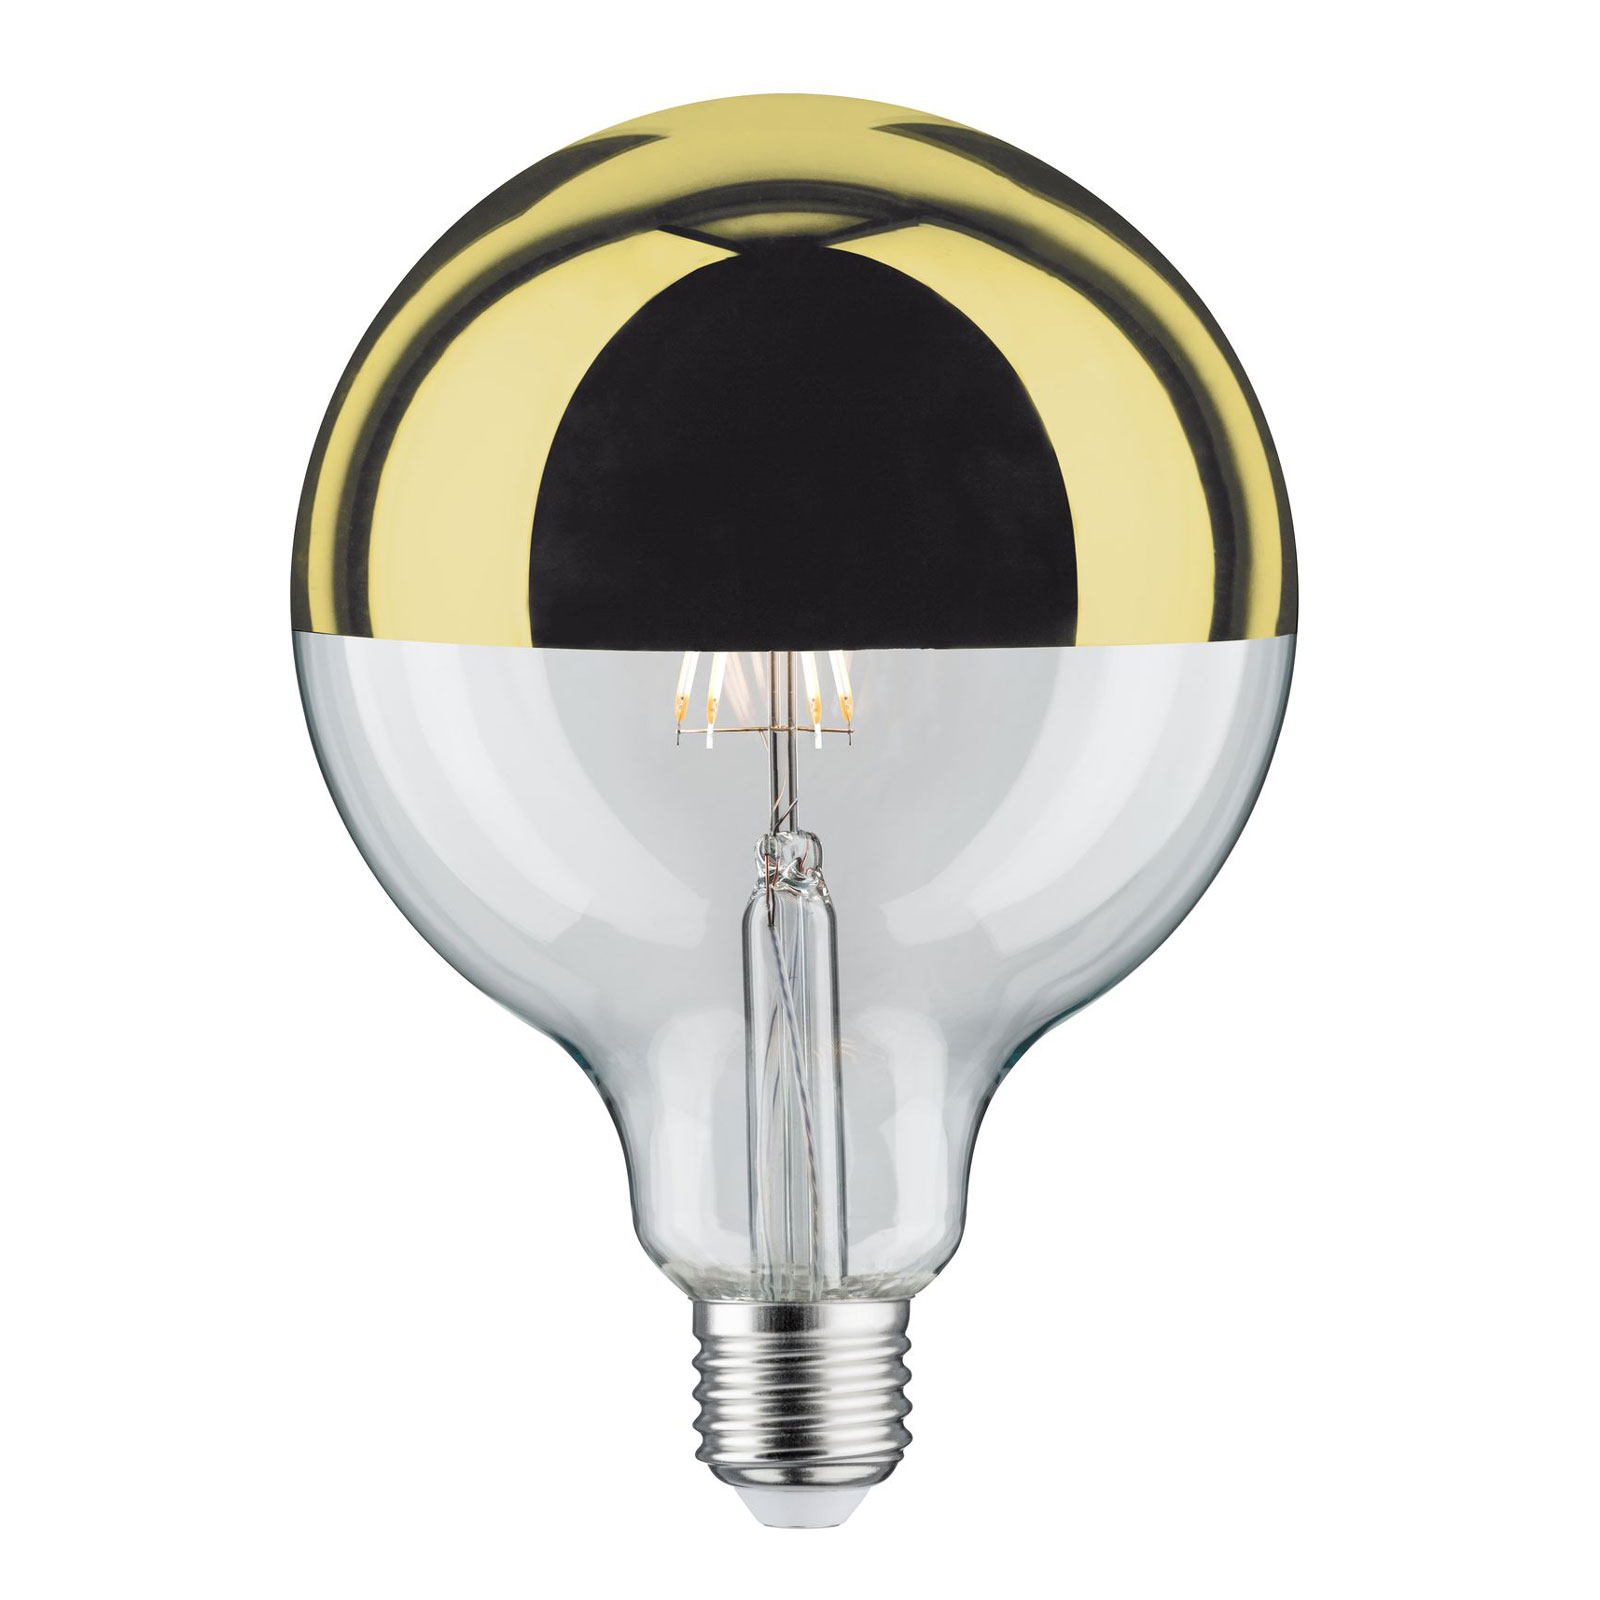 Indrukwekkend nietig Pessimistisch LED lamp E27 G125 827 6,5W kopspiegel goud | Lampen24.be